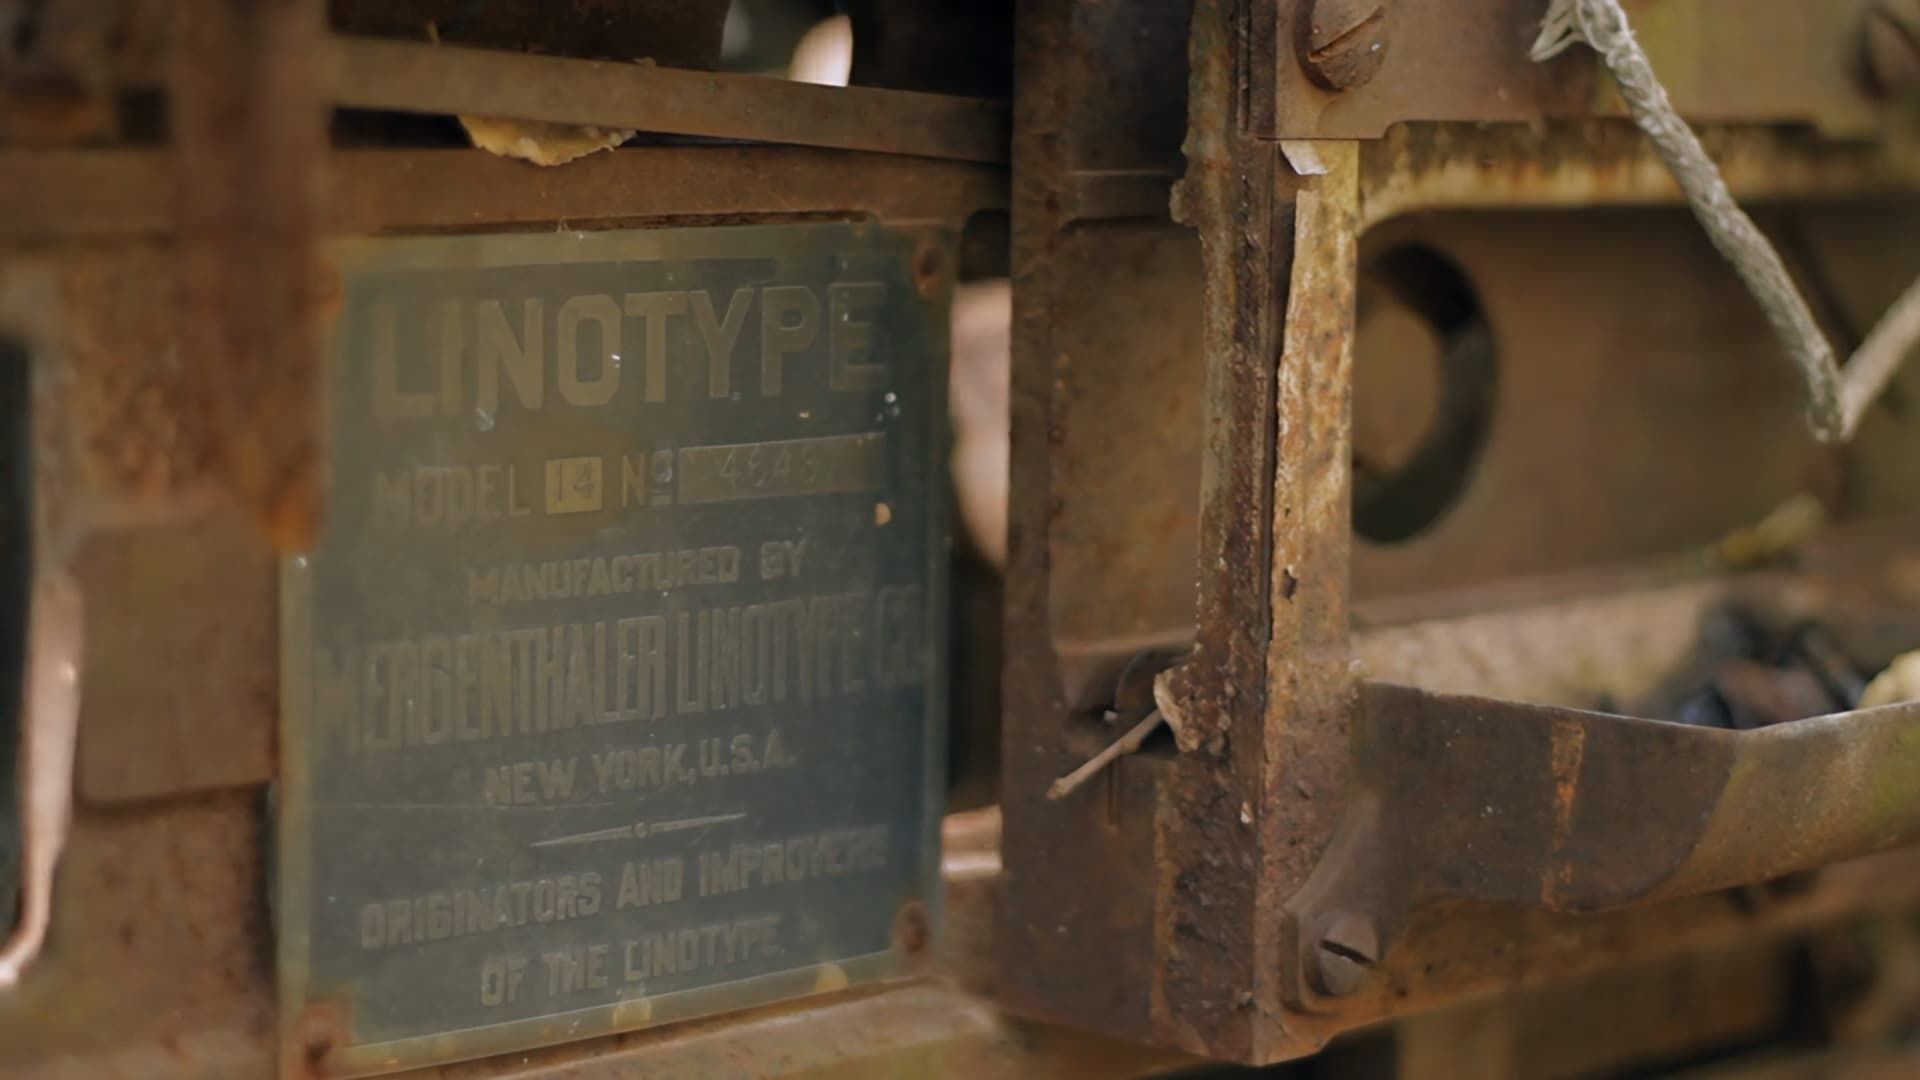 Linotype: The Film background